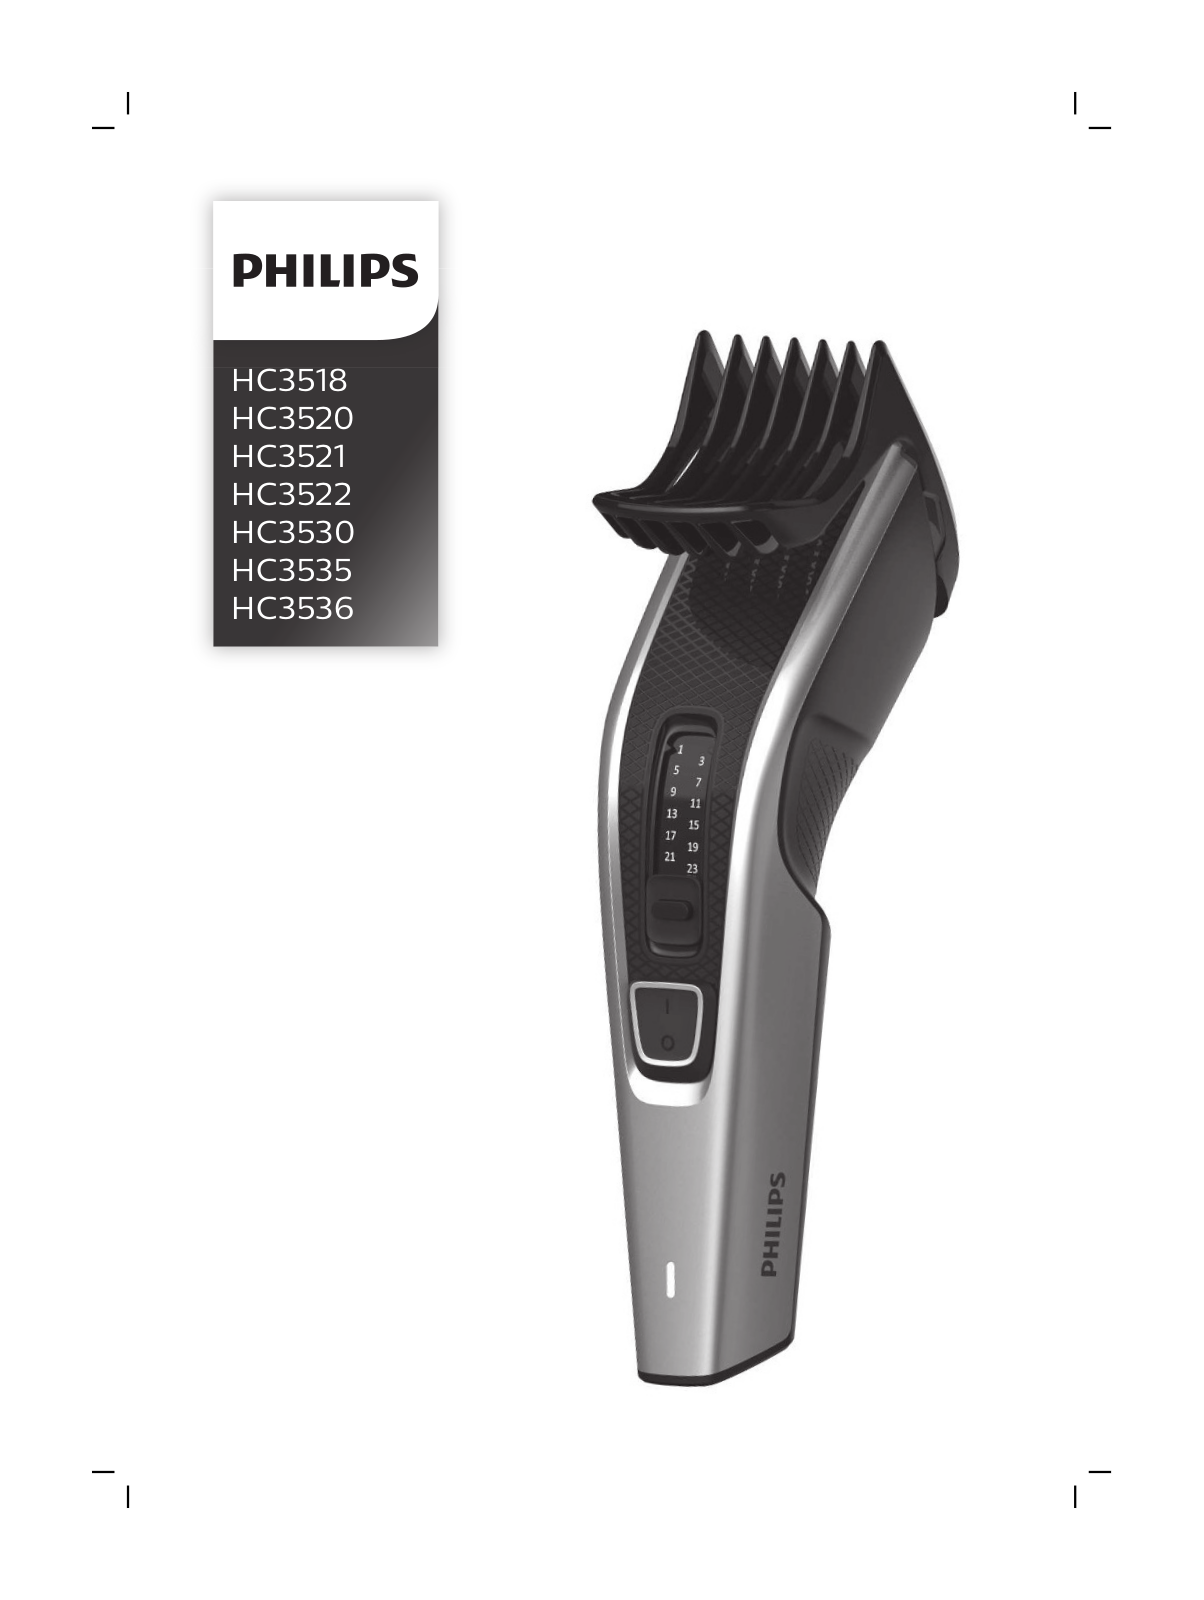 Philips HC3535 User Manual